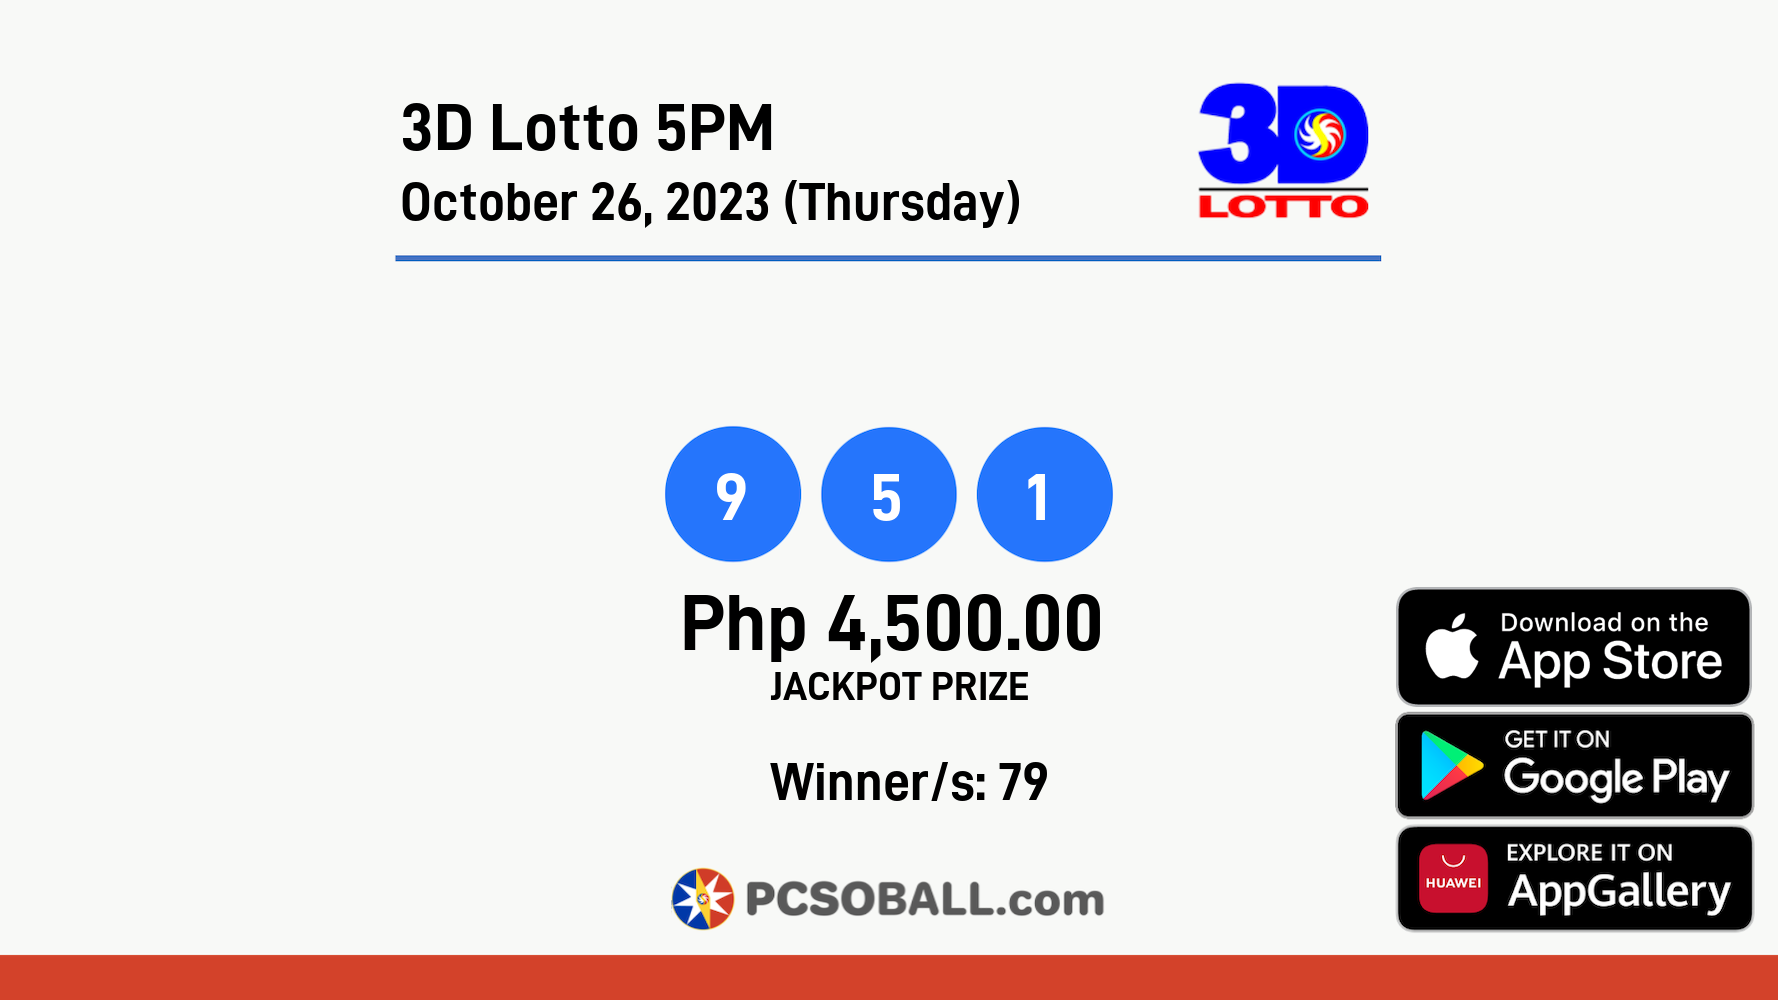 3D Lotto 5PM October 26, 2023 (Thursday) Result